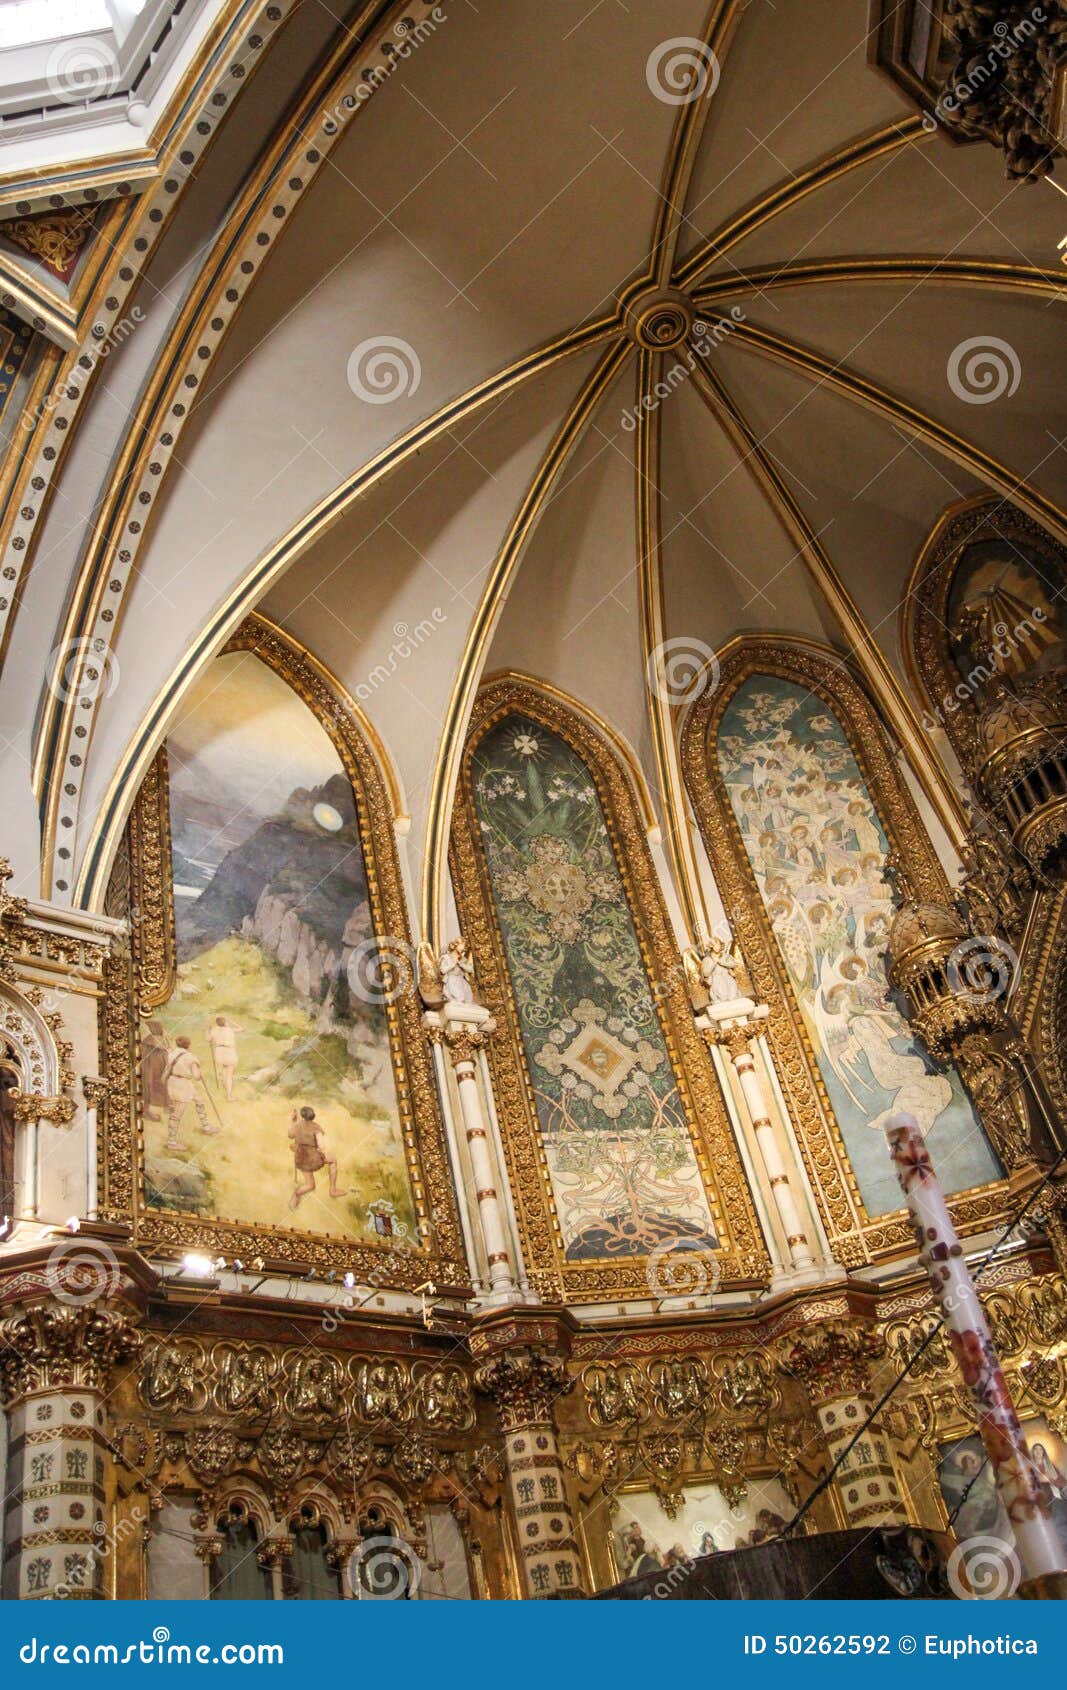 basilica ceiling detail, montserrat monastery near barcelona